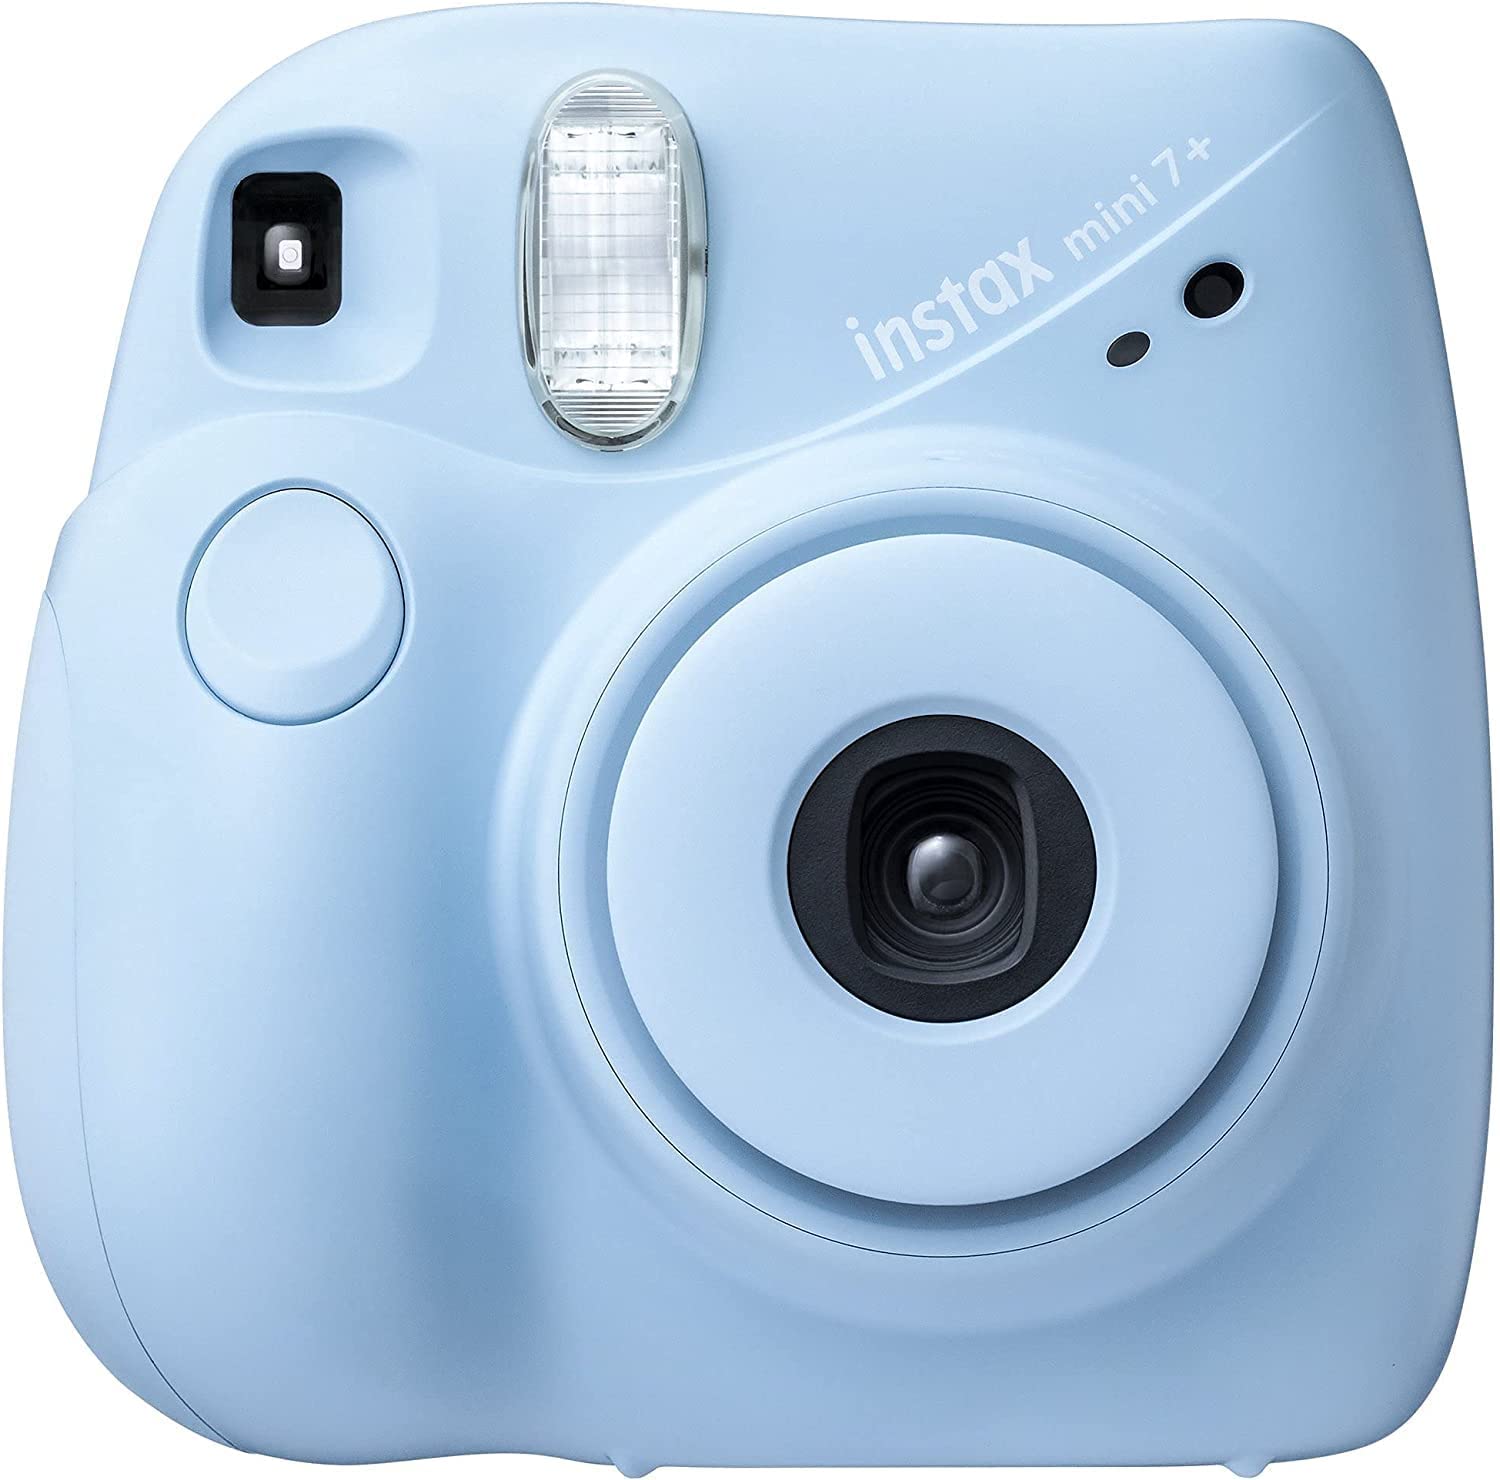 Fujifilm Instax Mini 7+ Instant Camera Light Blue CAMERA ONLY - NO FILM INCLUDED